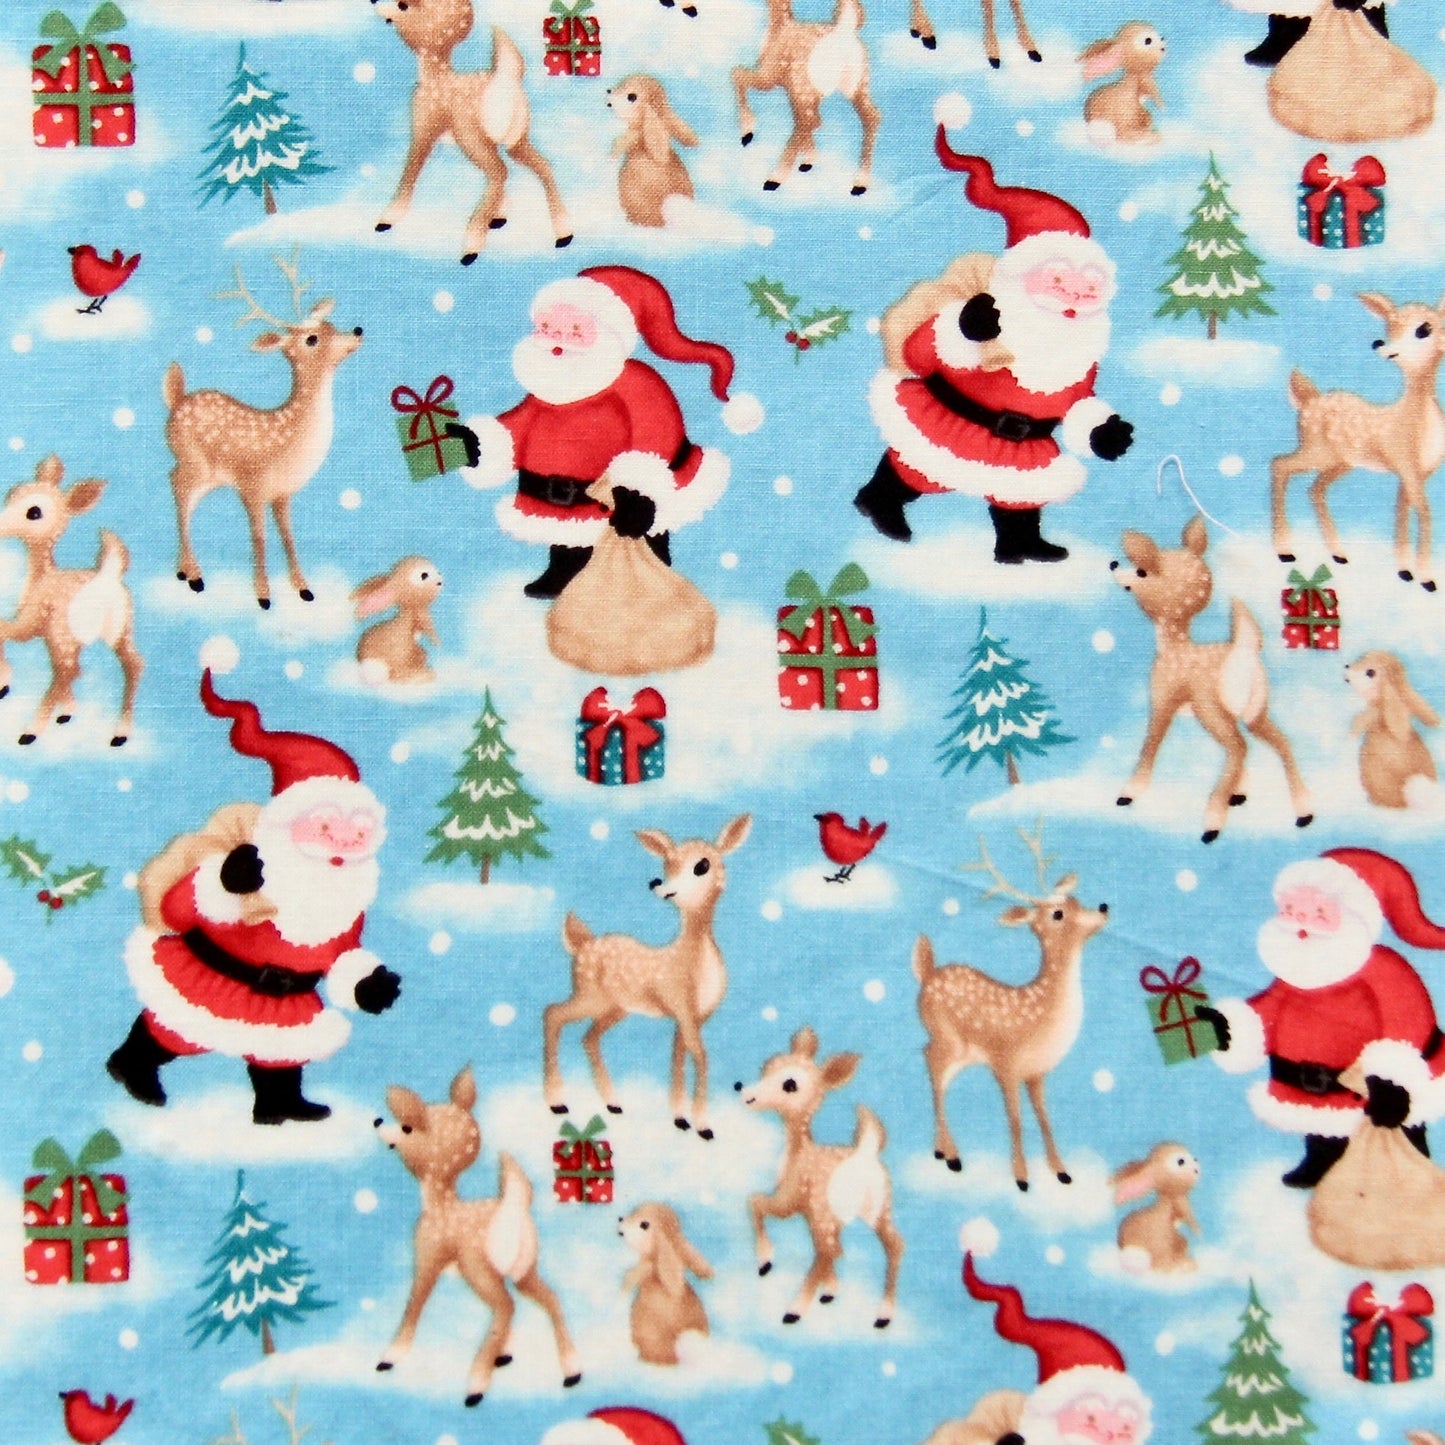 Fabric Felt - Christmas - Deer Santa